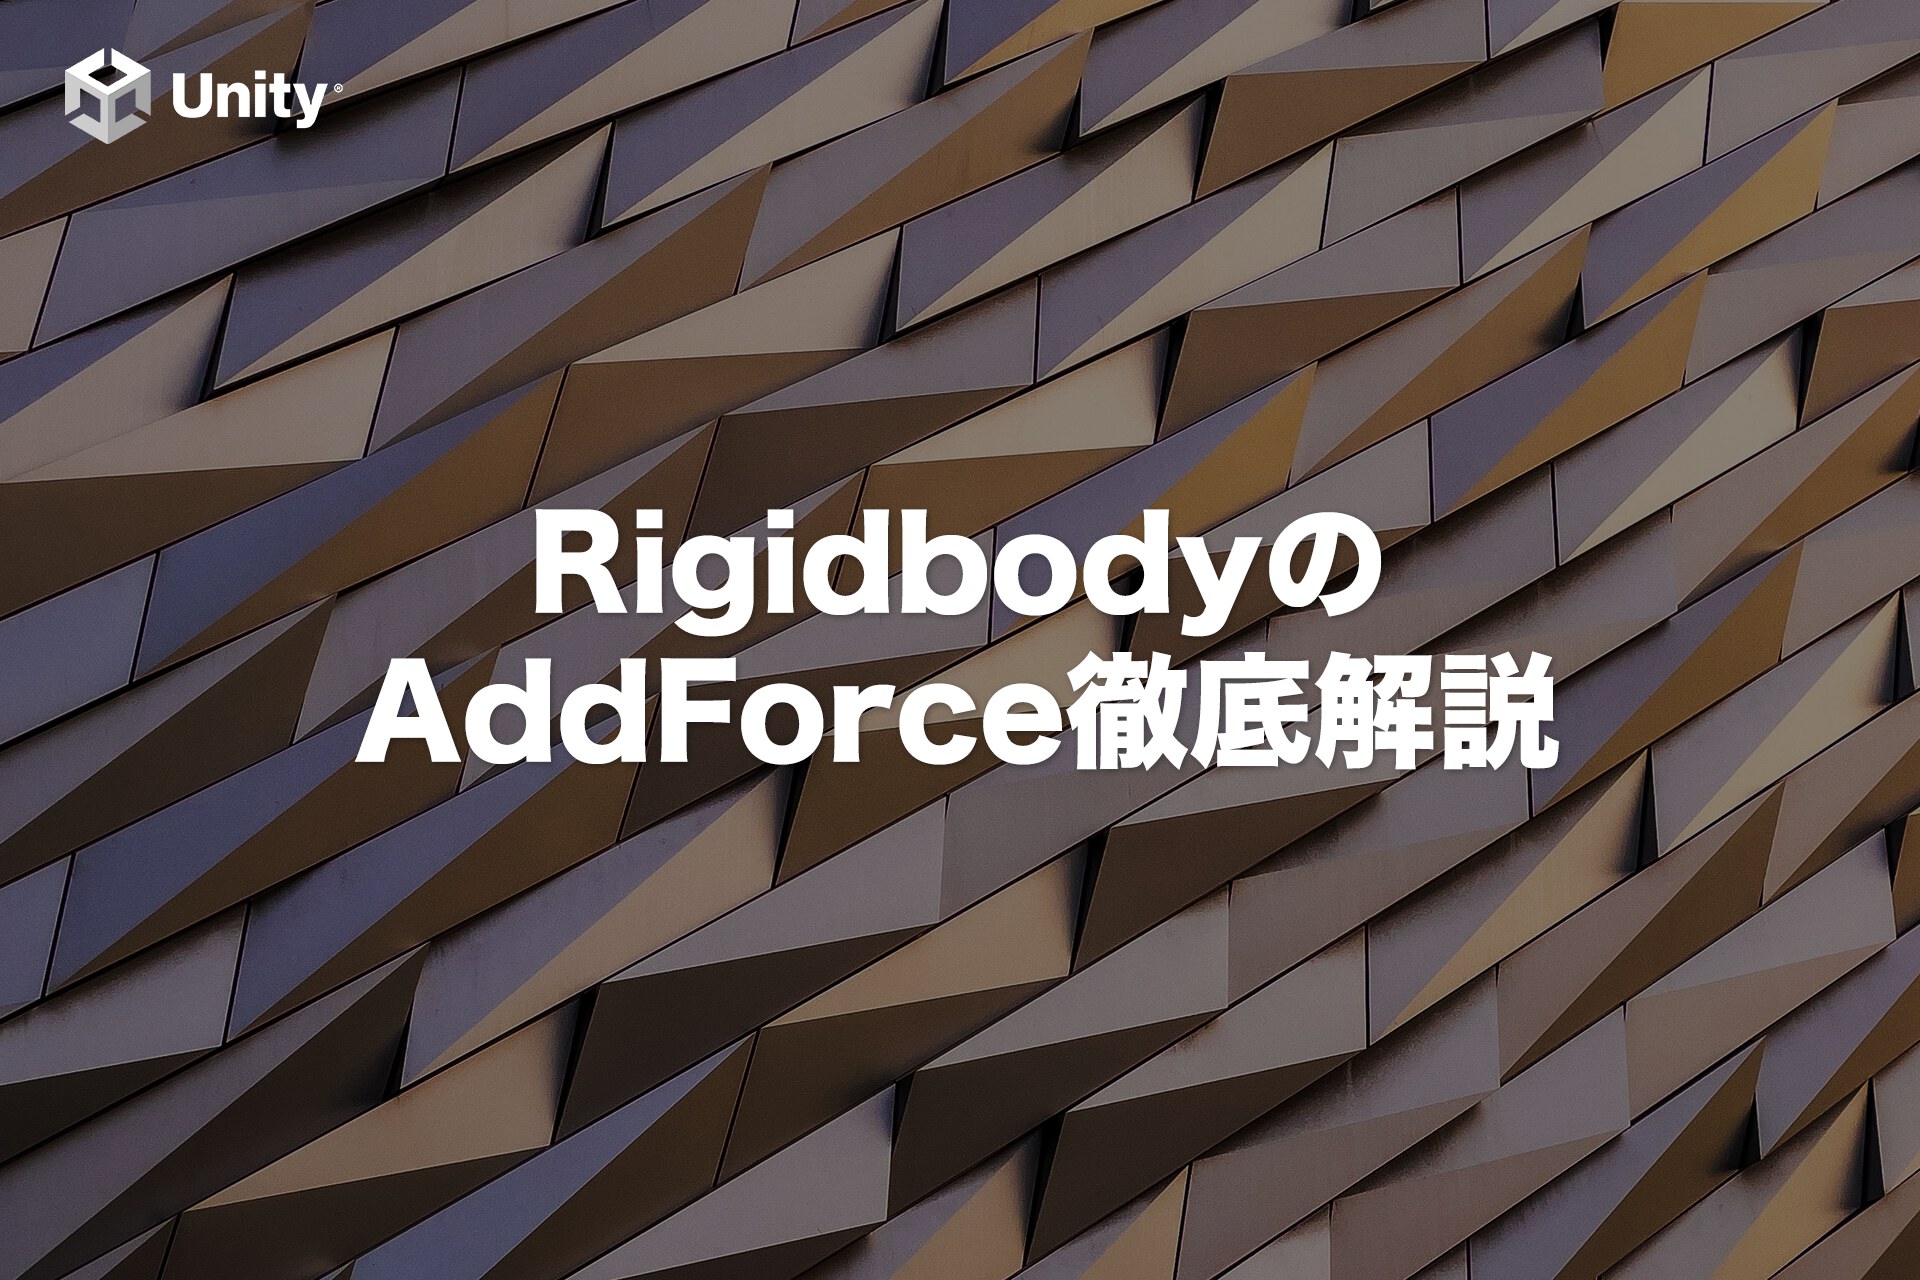 【Unity】RigidbodyのAddForceは「ForceMode」の違いに注目！4つのForceModeを徹底解説！